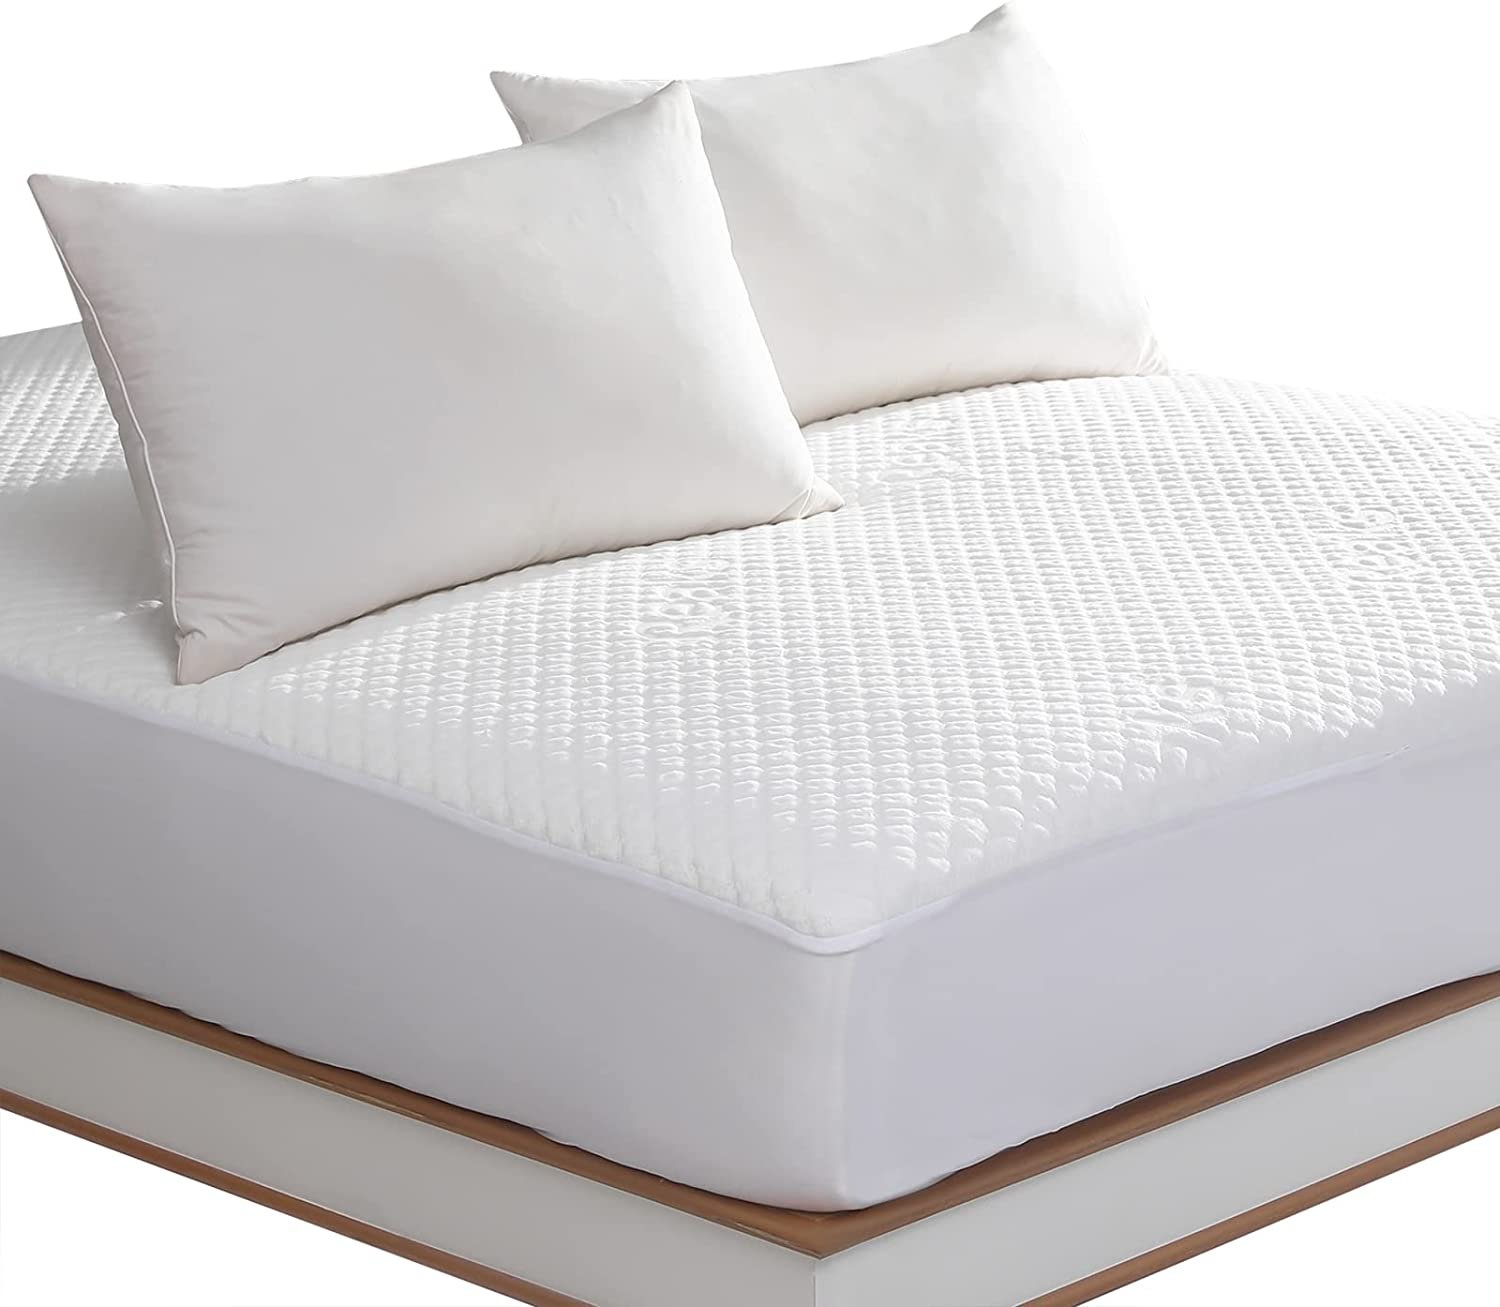 Queen Size Bed Waterproof Bamboo Mattress Protector